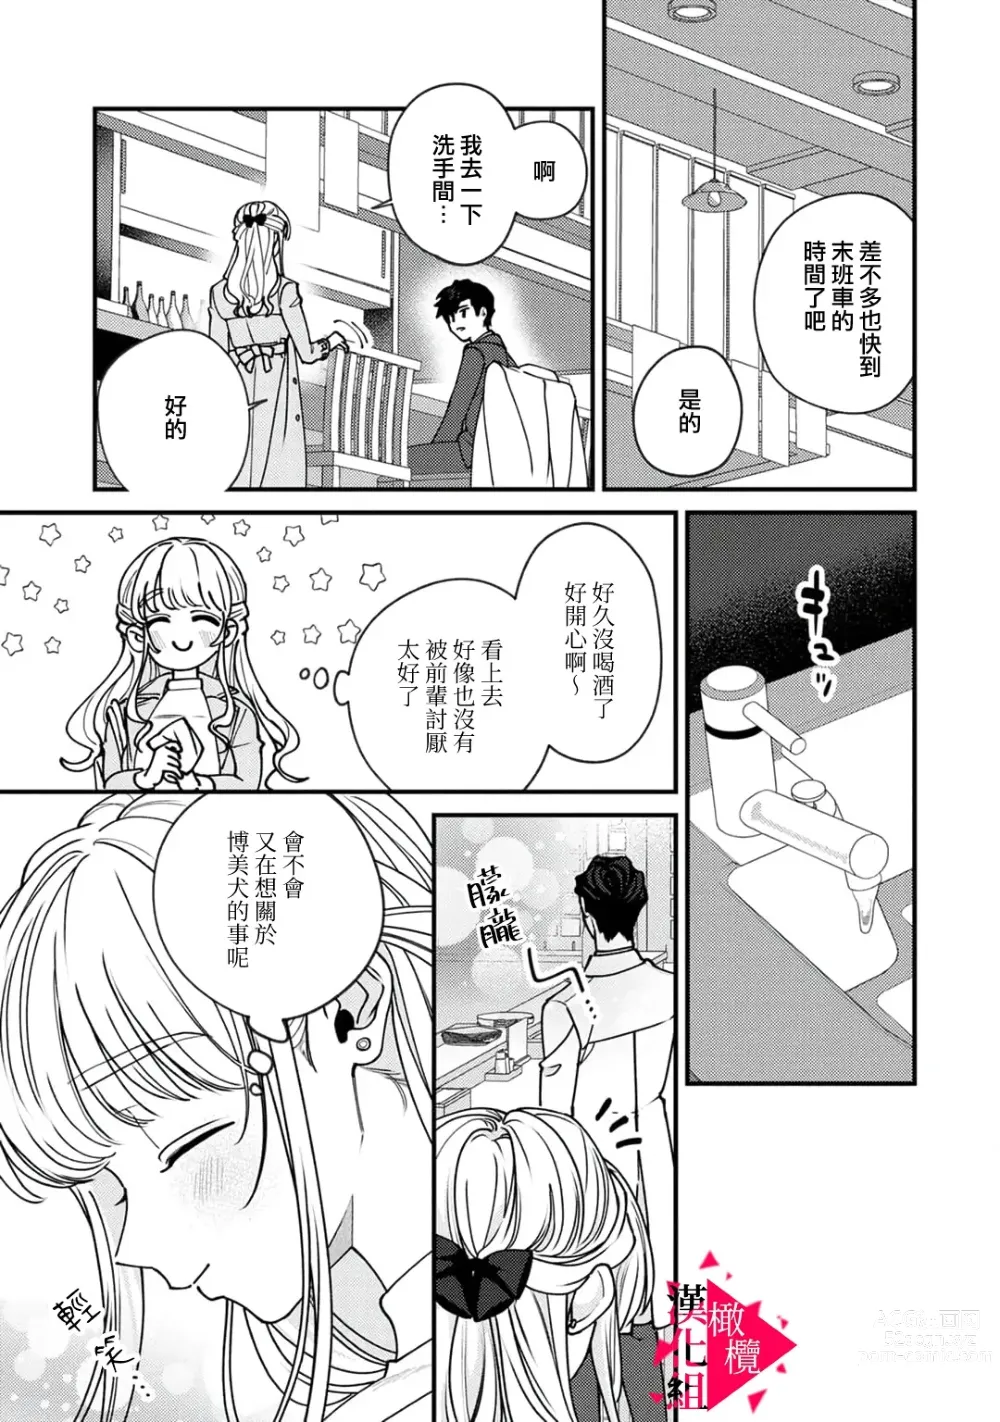 Page 23 of manga 南前辈比妄想中更加情色绝伦~01-06